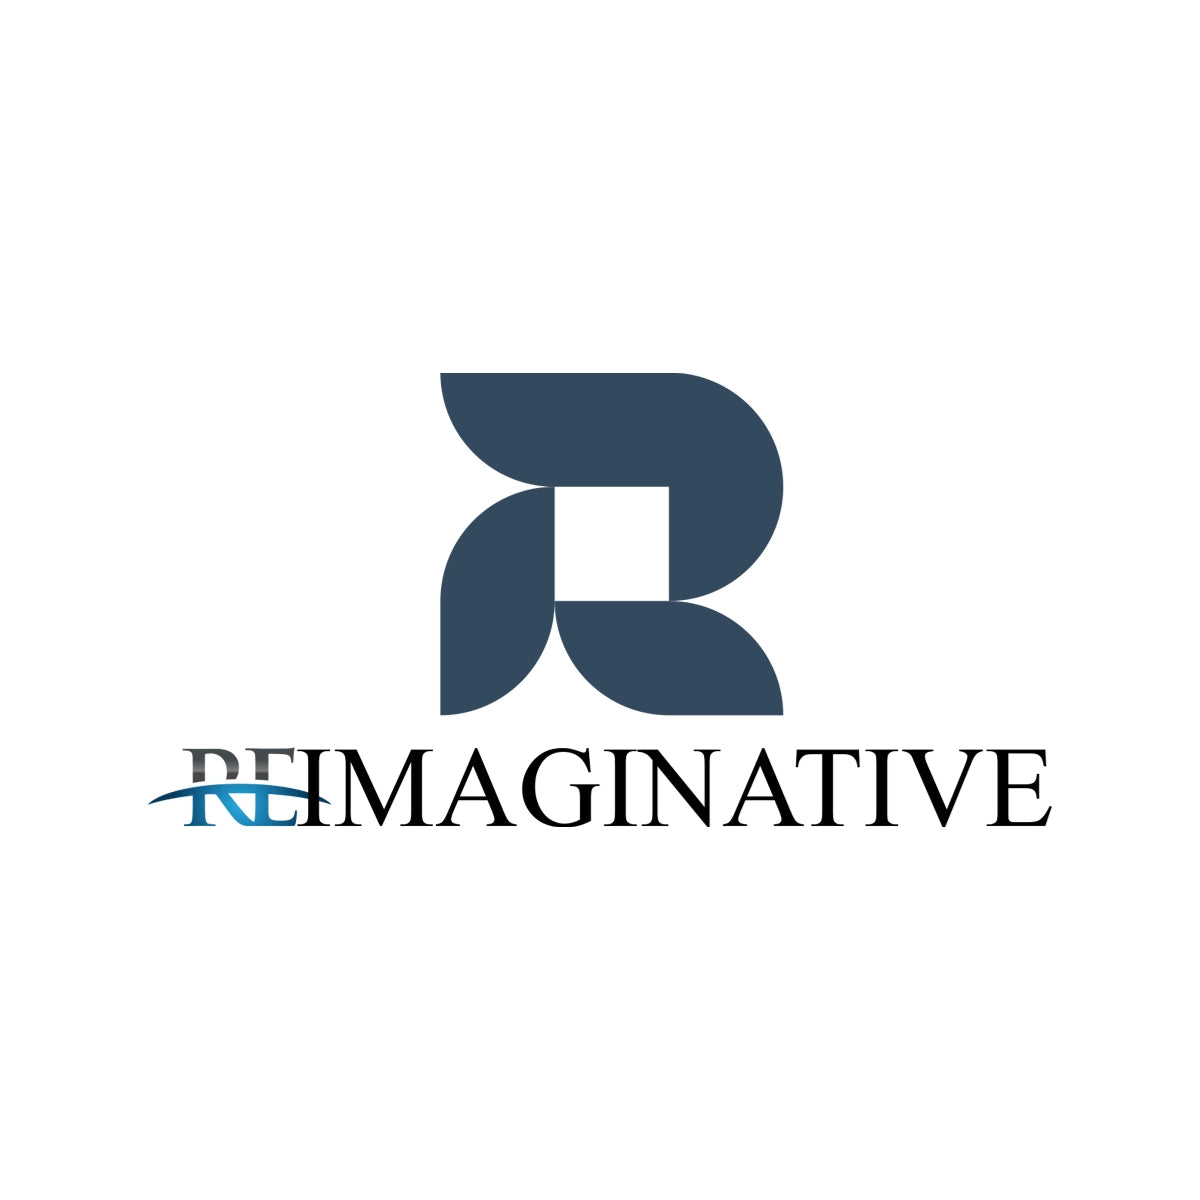 reimaginative.com